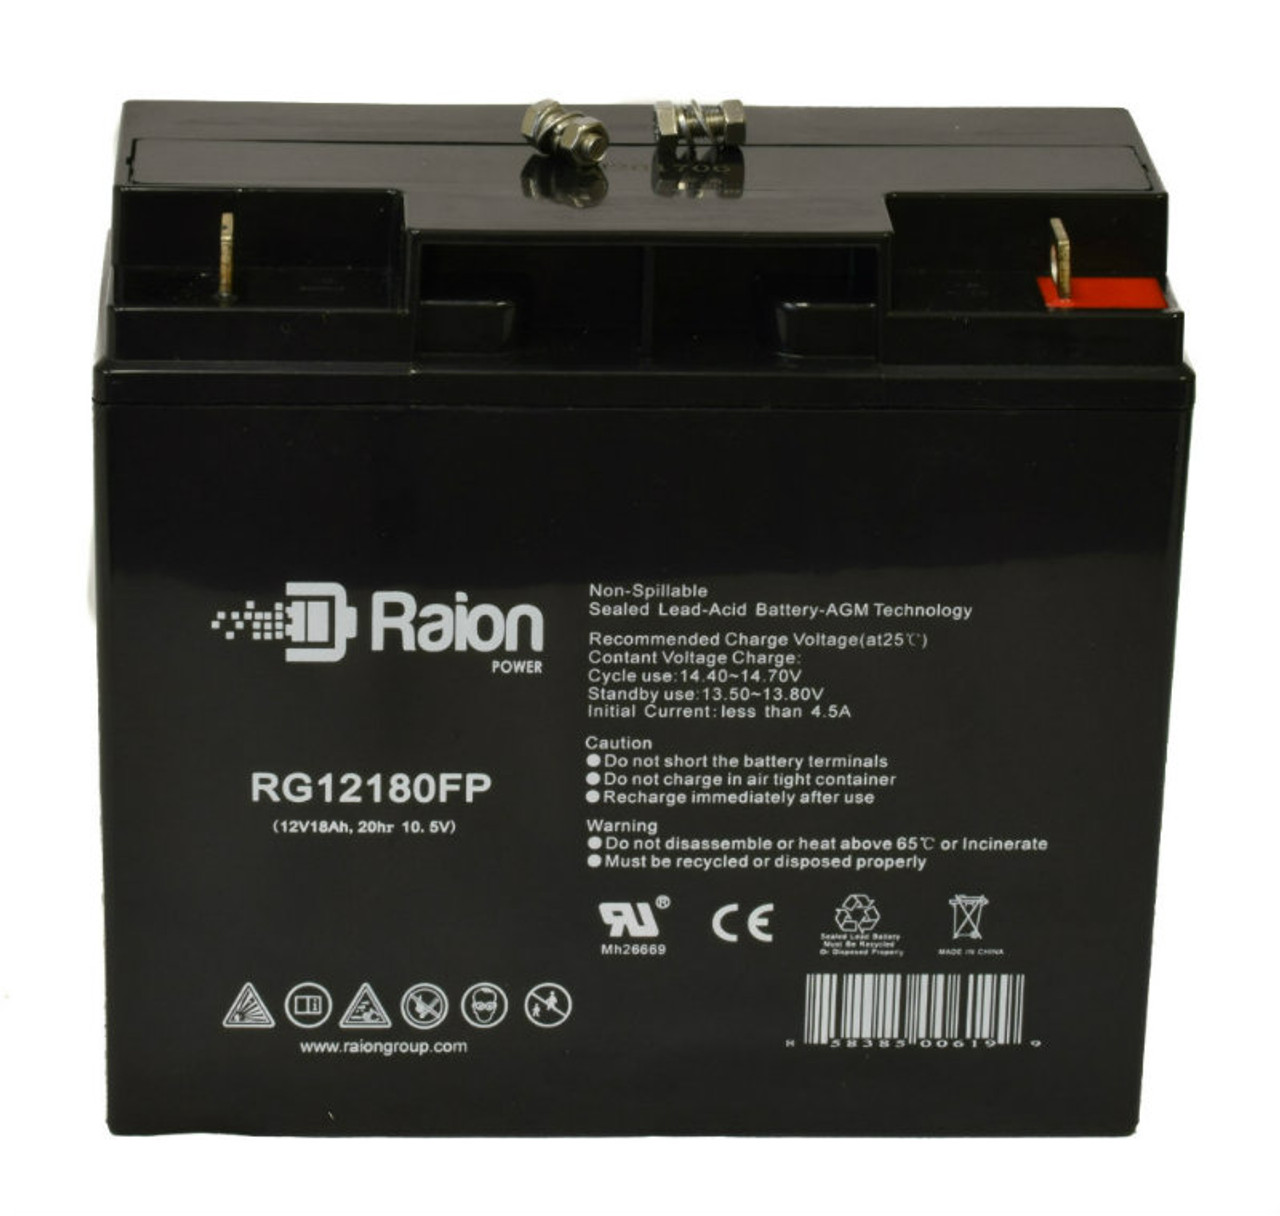 Raion Power RG12180FP 12V 18Ah Lead Acid Battery for SigmasTek SP12-18HR